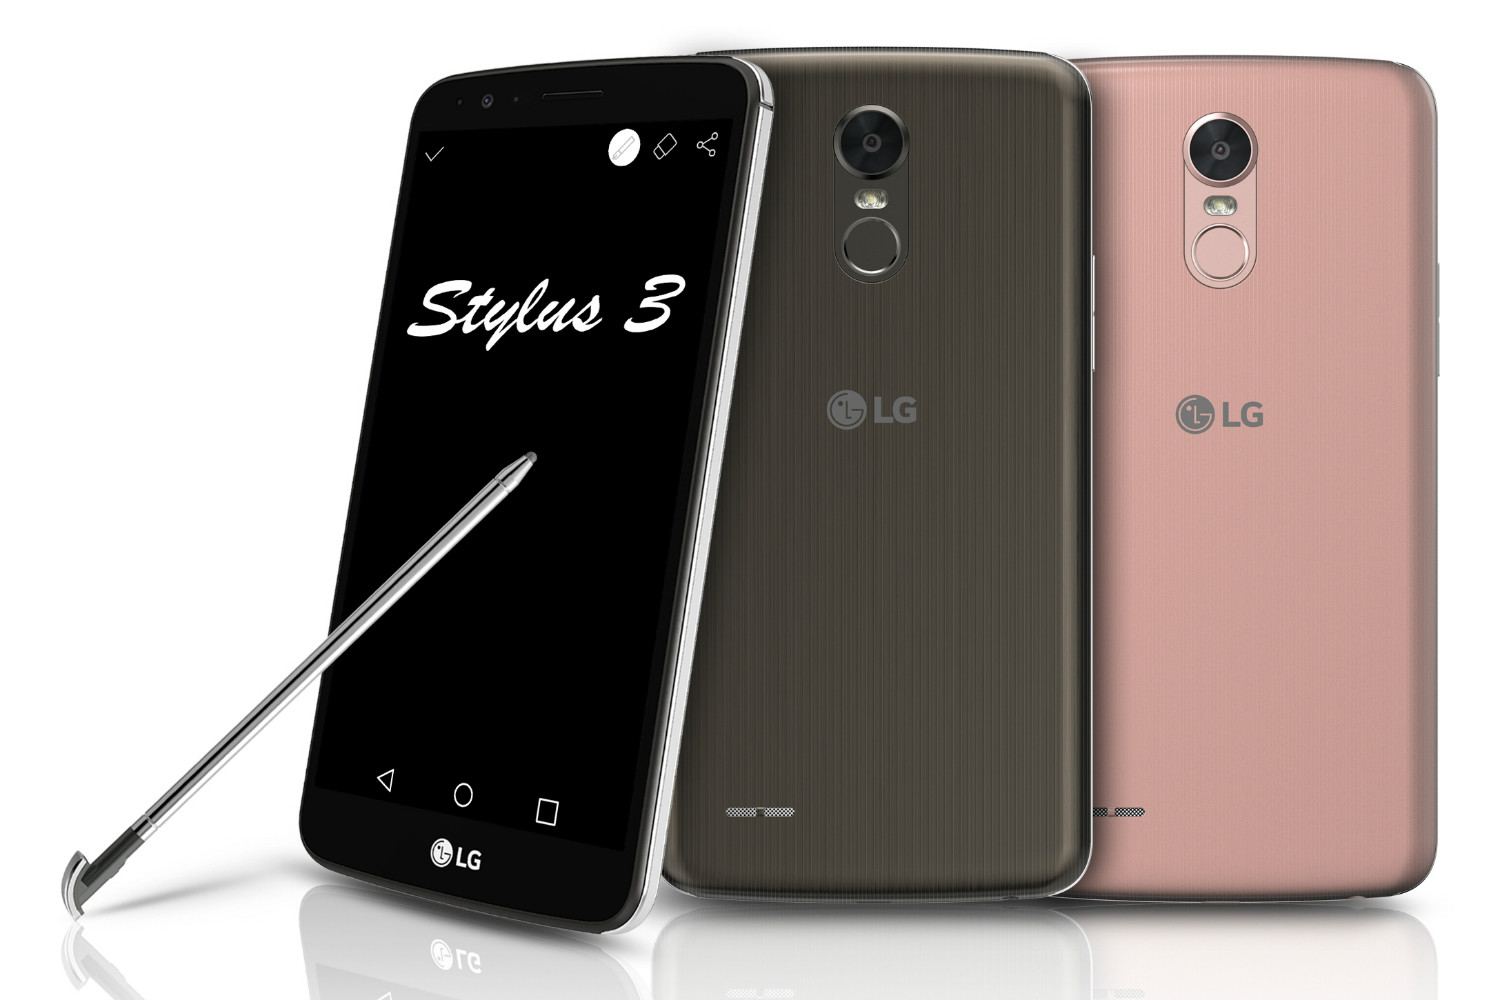 LG Stylus 3 smartphone